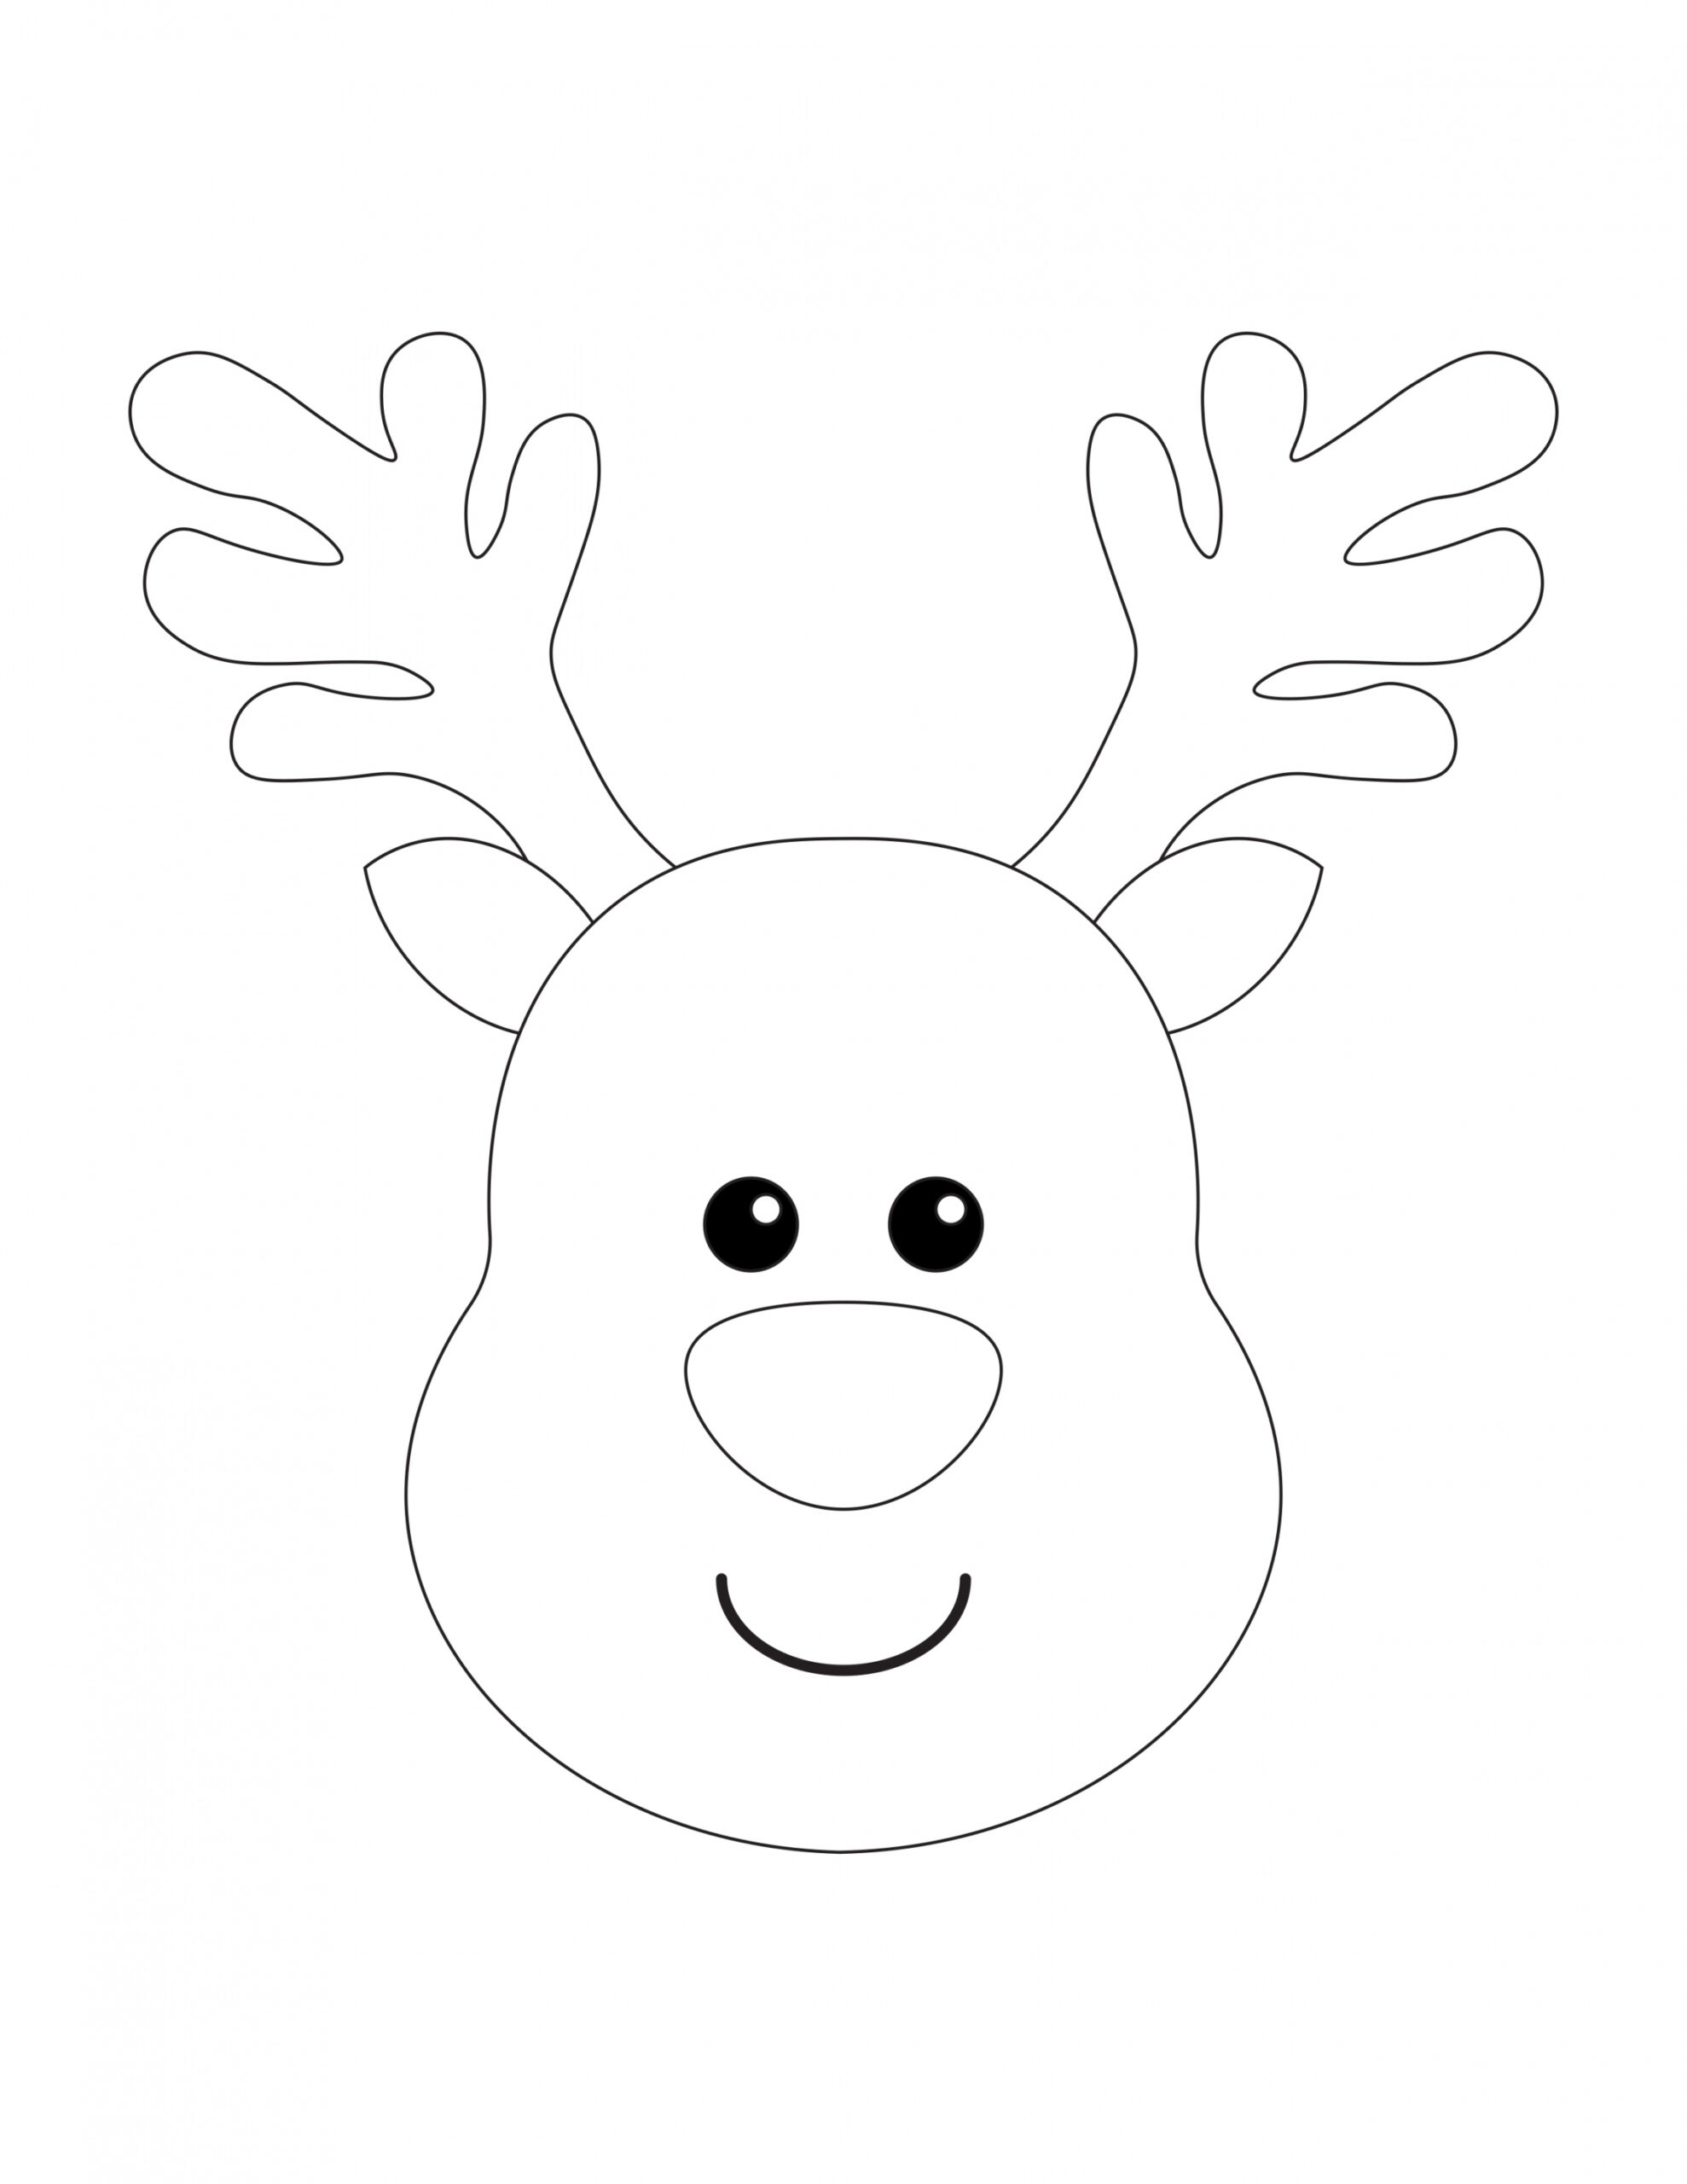 Free Printable Reindeer Templates - Daily Printables - FREE Printables - Reindeer Template Printable